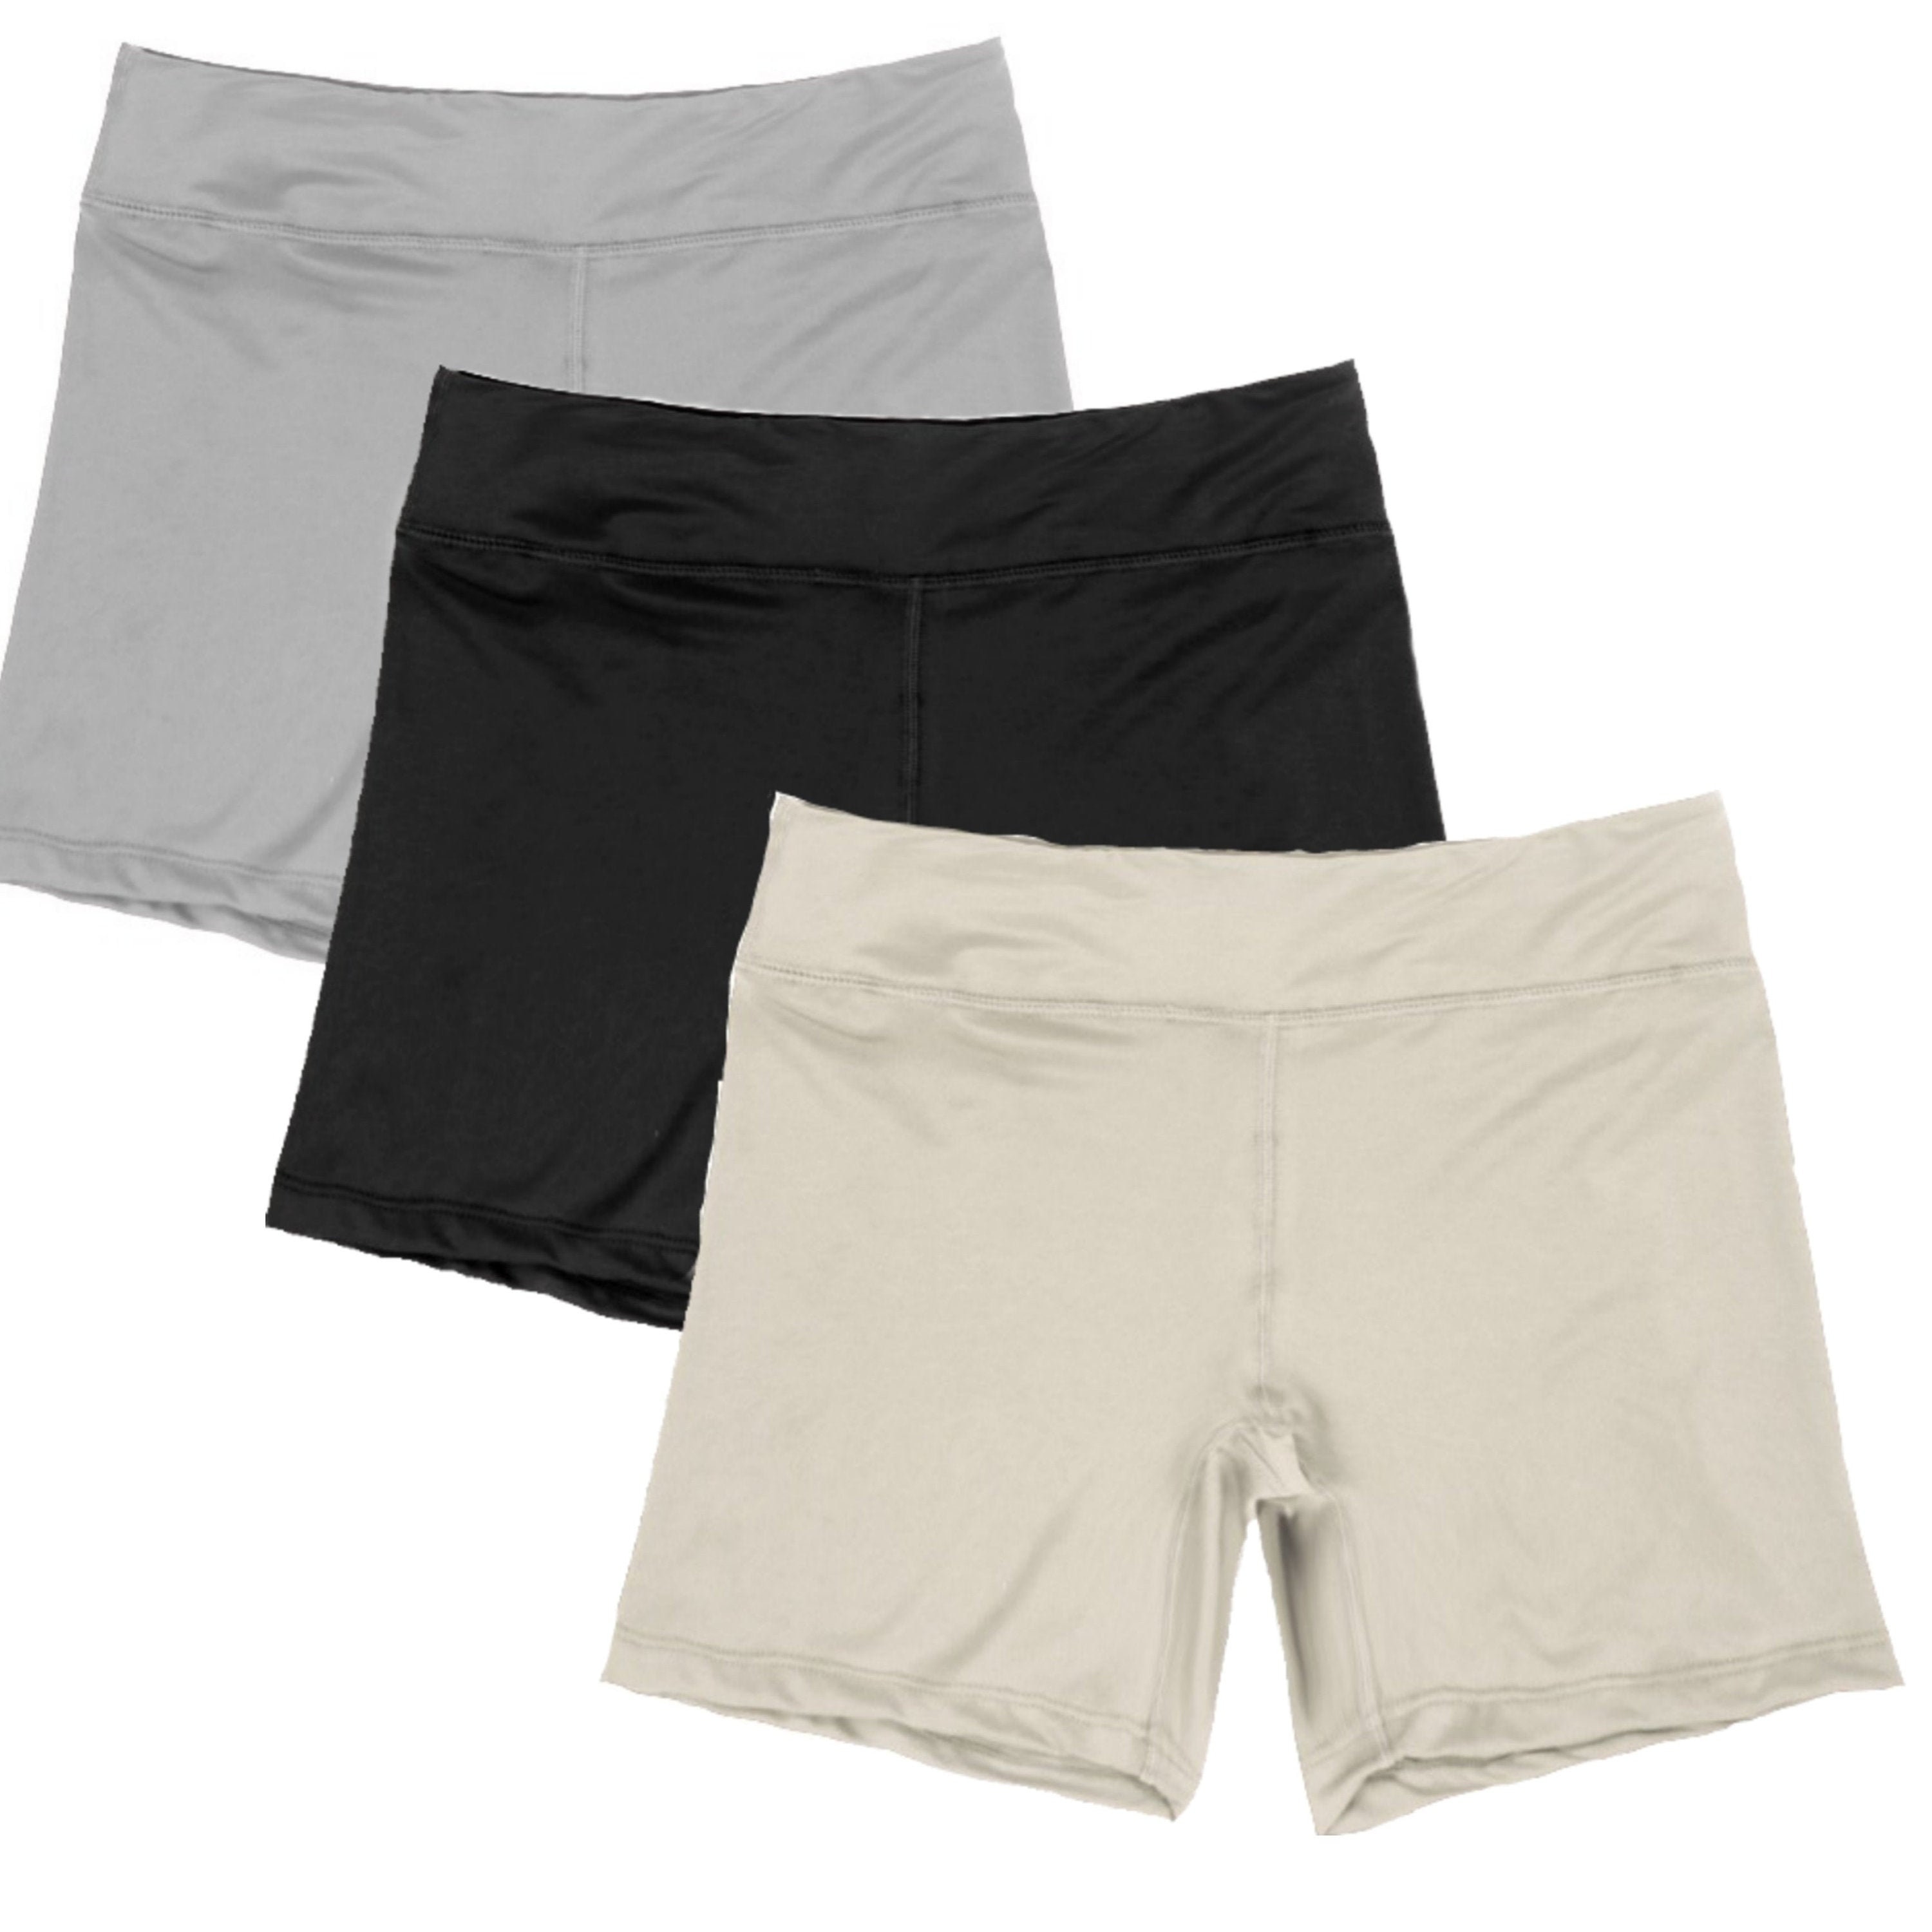 comfort anti chafing shorts/pants plus size 2xl 3xl 4xl 5xl 6xl